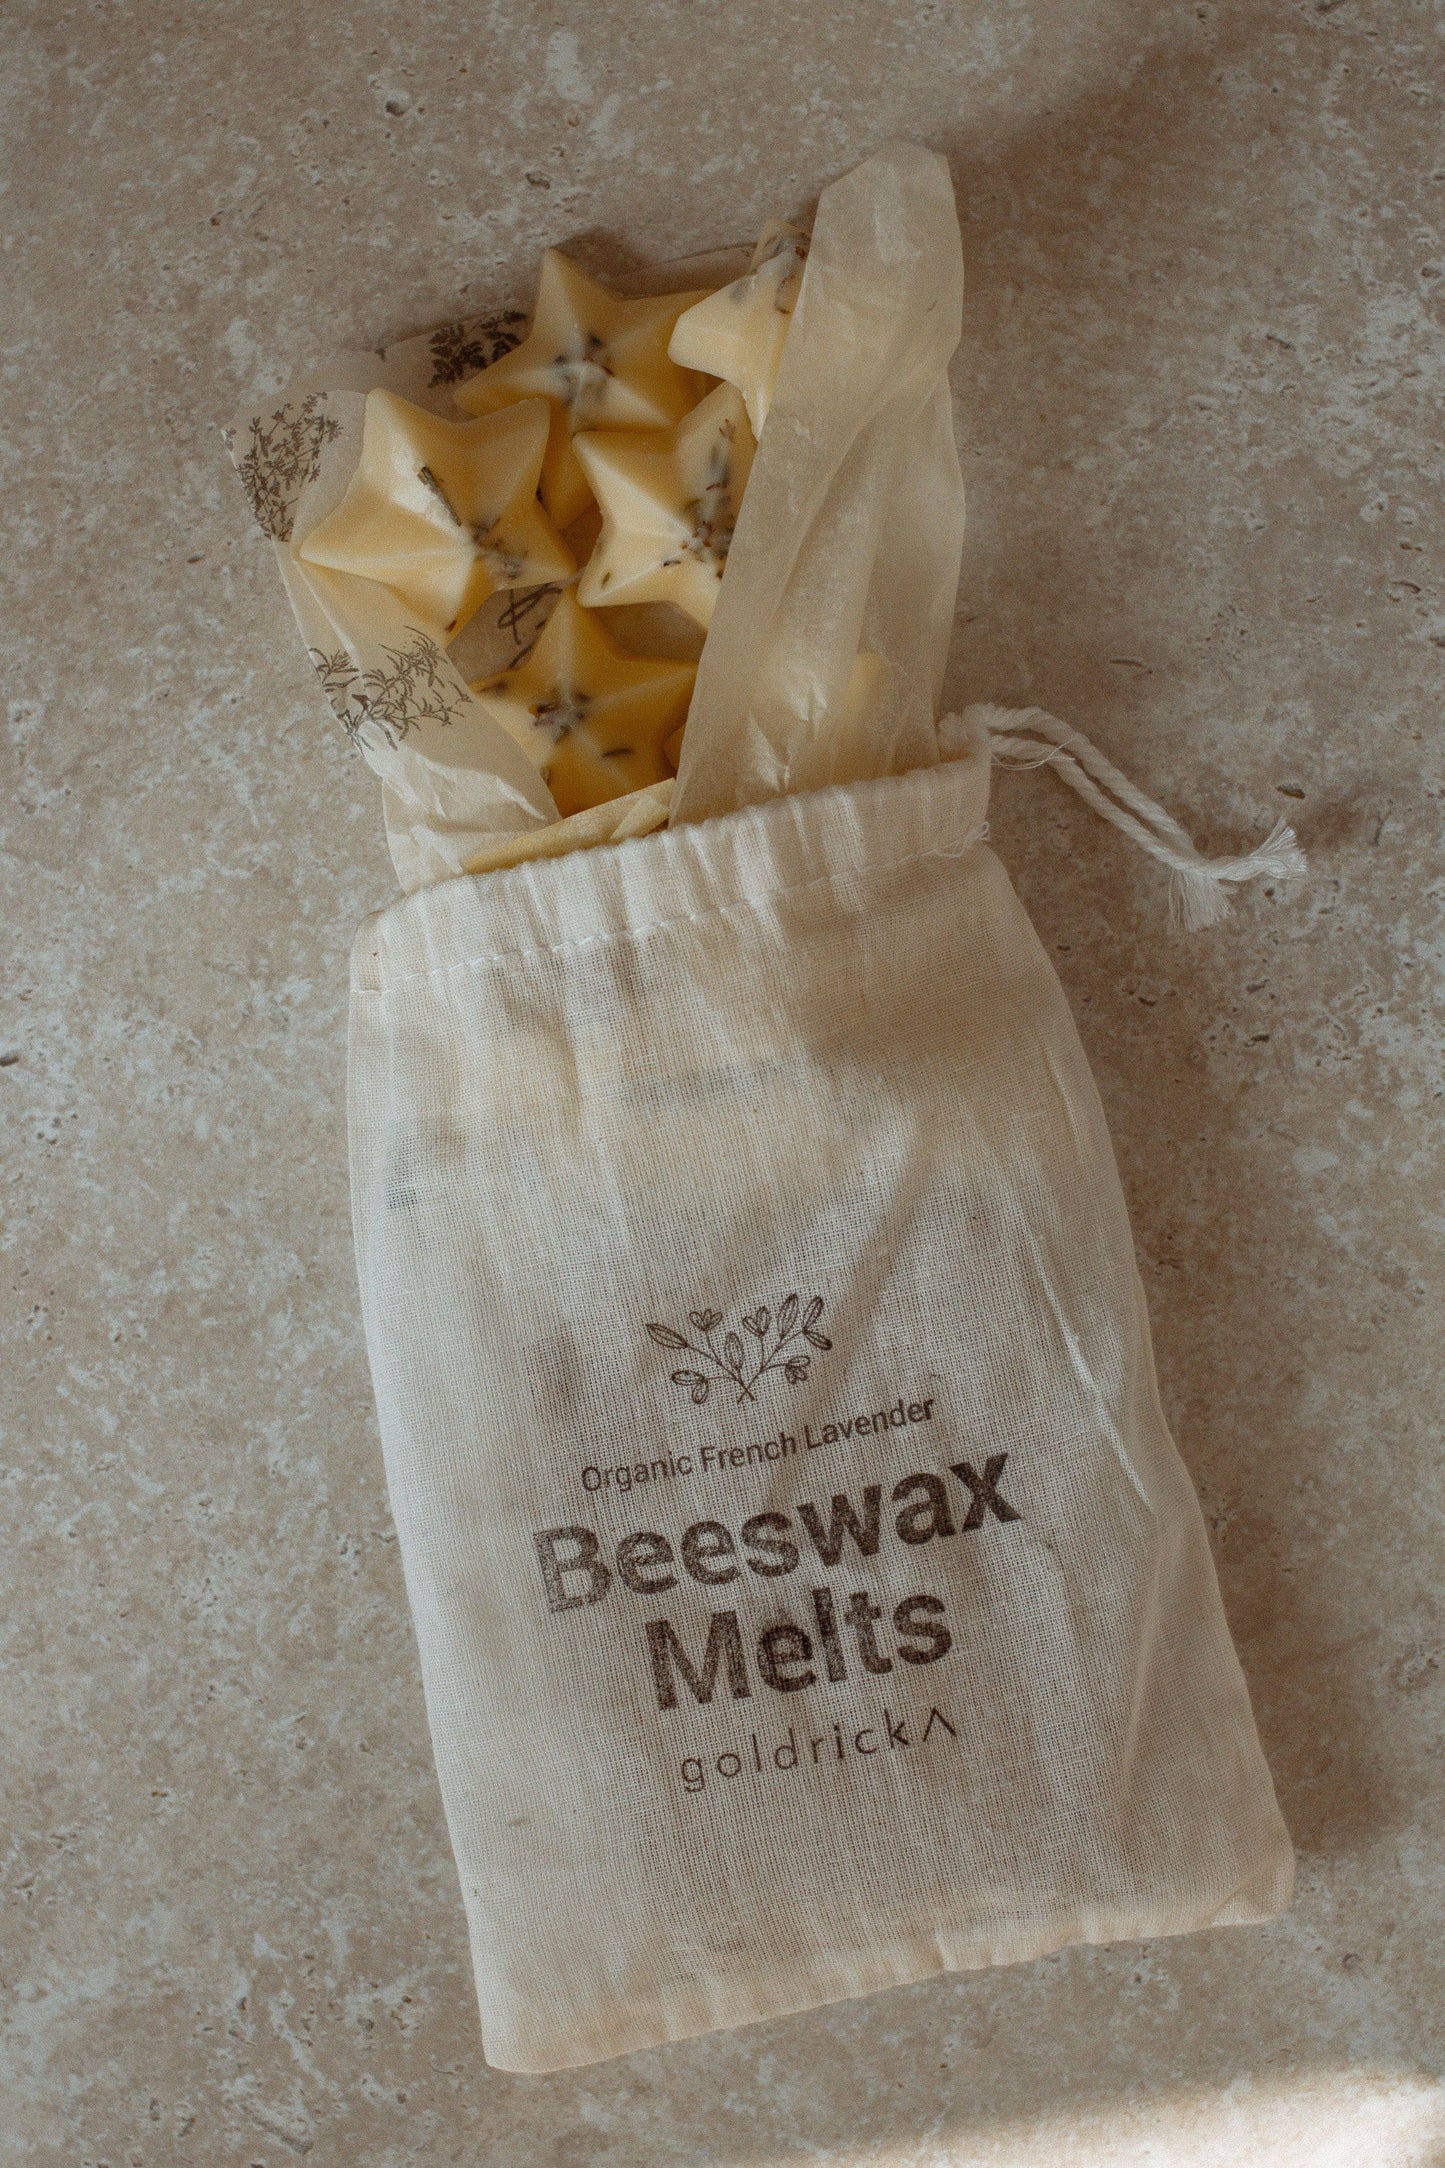 Organic Lavender Beeswax Melts By Goldrick